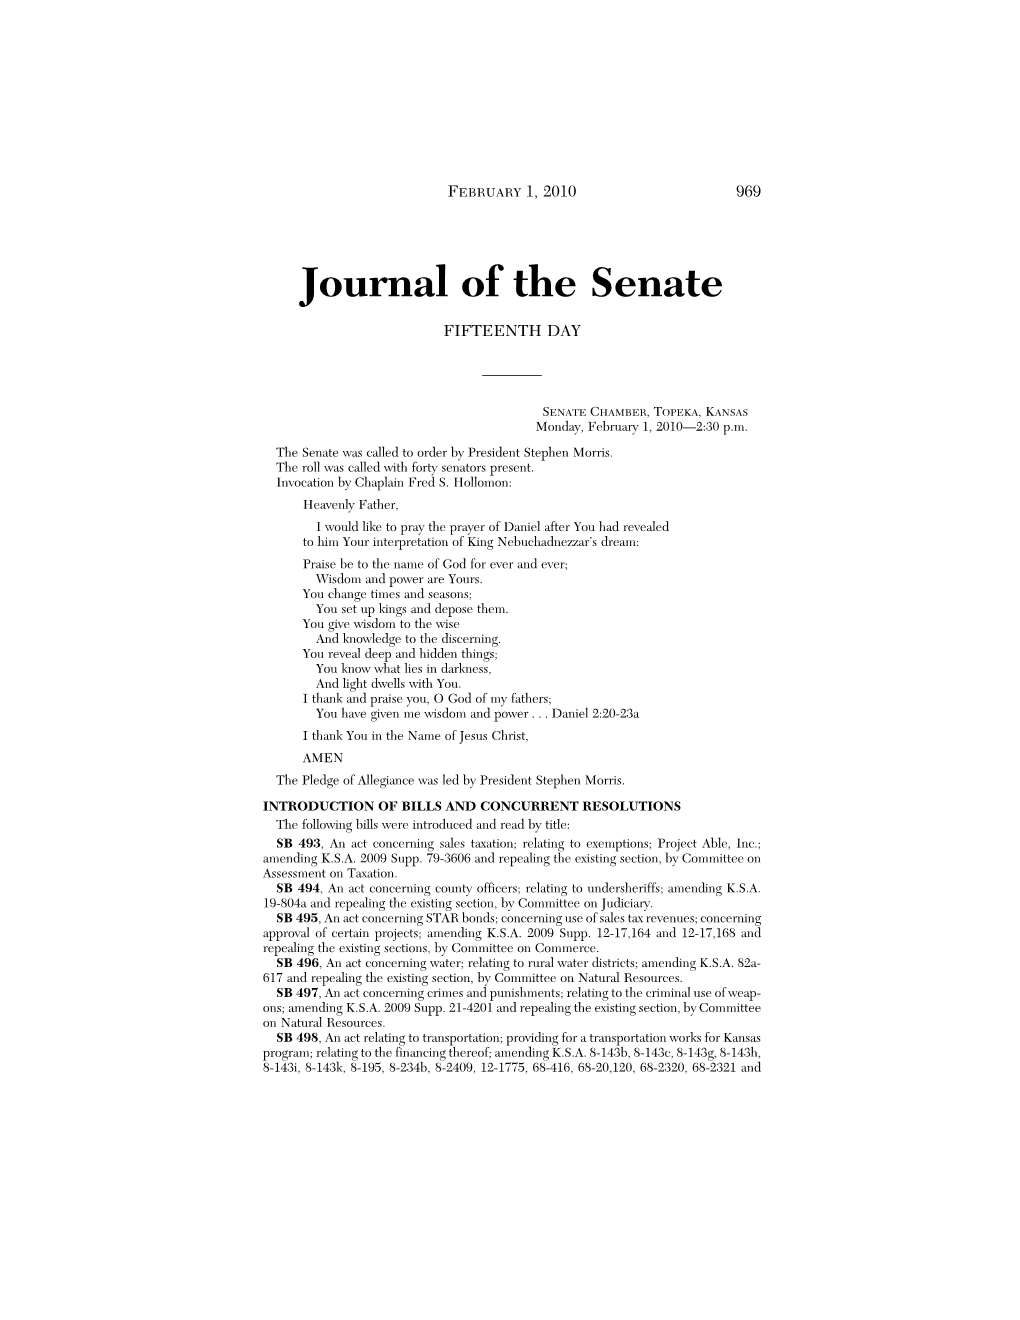 Journal of the Senate FIFTEENTH DAY